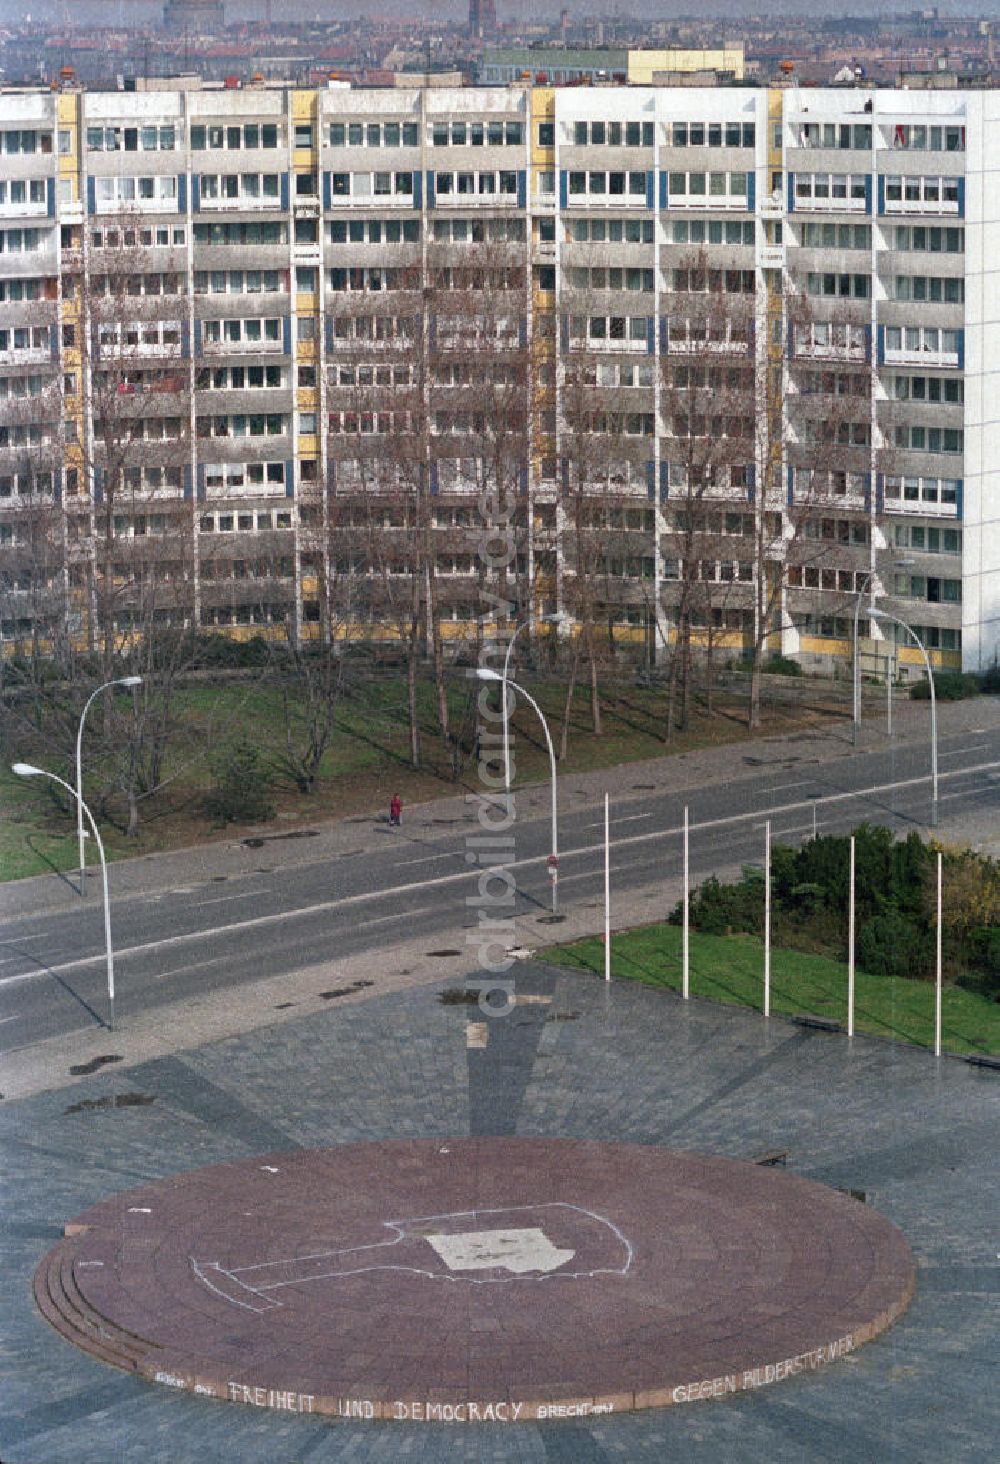 DDR-Fotoarchiv: Berlin - Blick auf den Leninplatz - Platz der Vereinten Nationen in Berlin